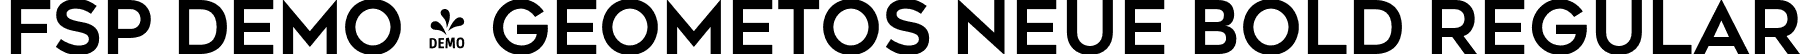 FSP DEMO - Geometos Neue Bold Regular font - Fontspring-DEMO-geometos_neue_bold.otf